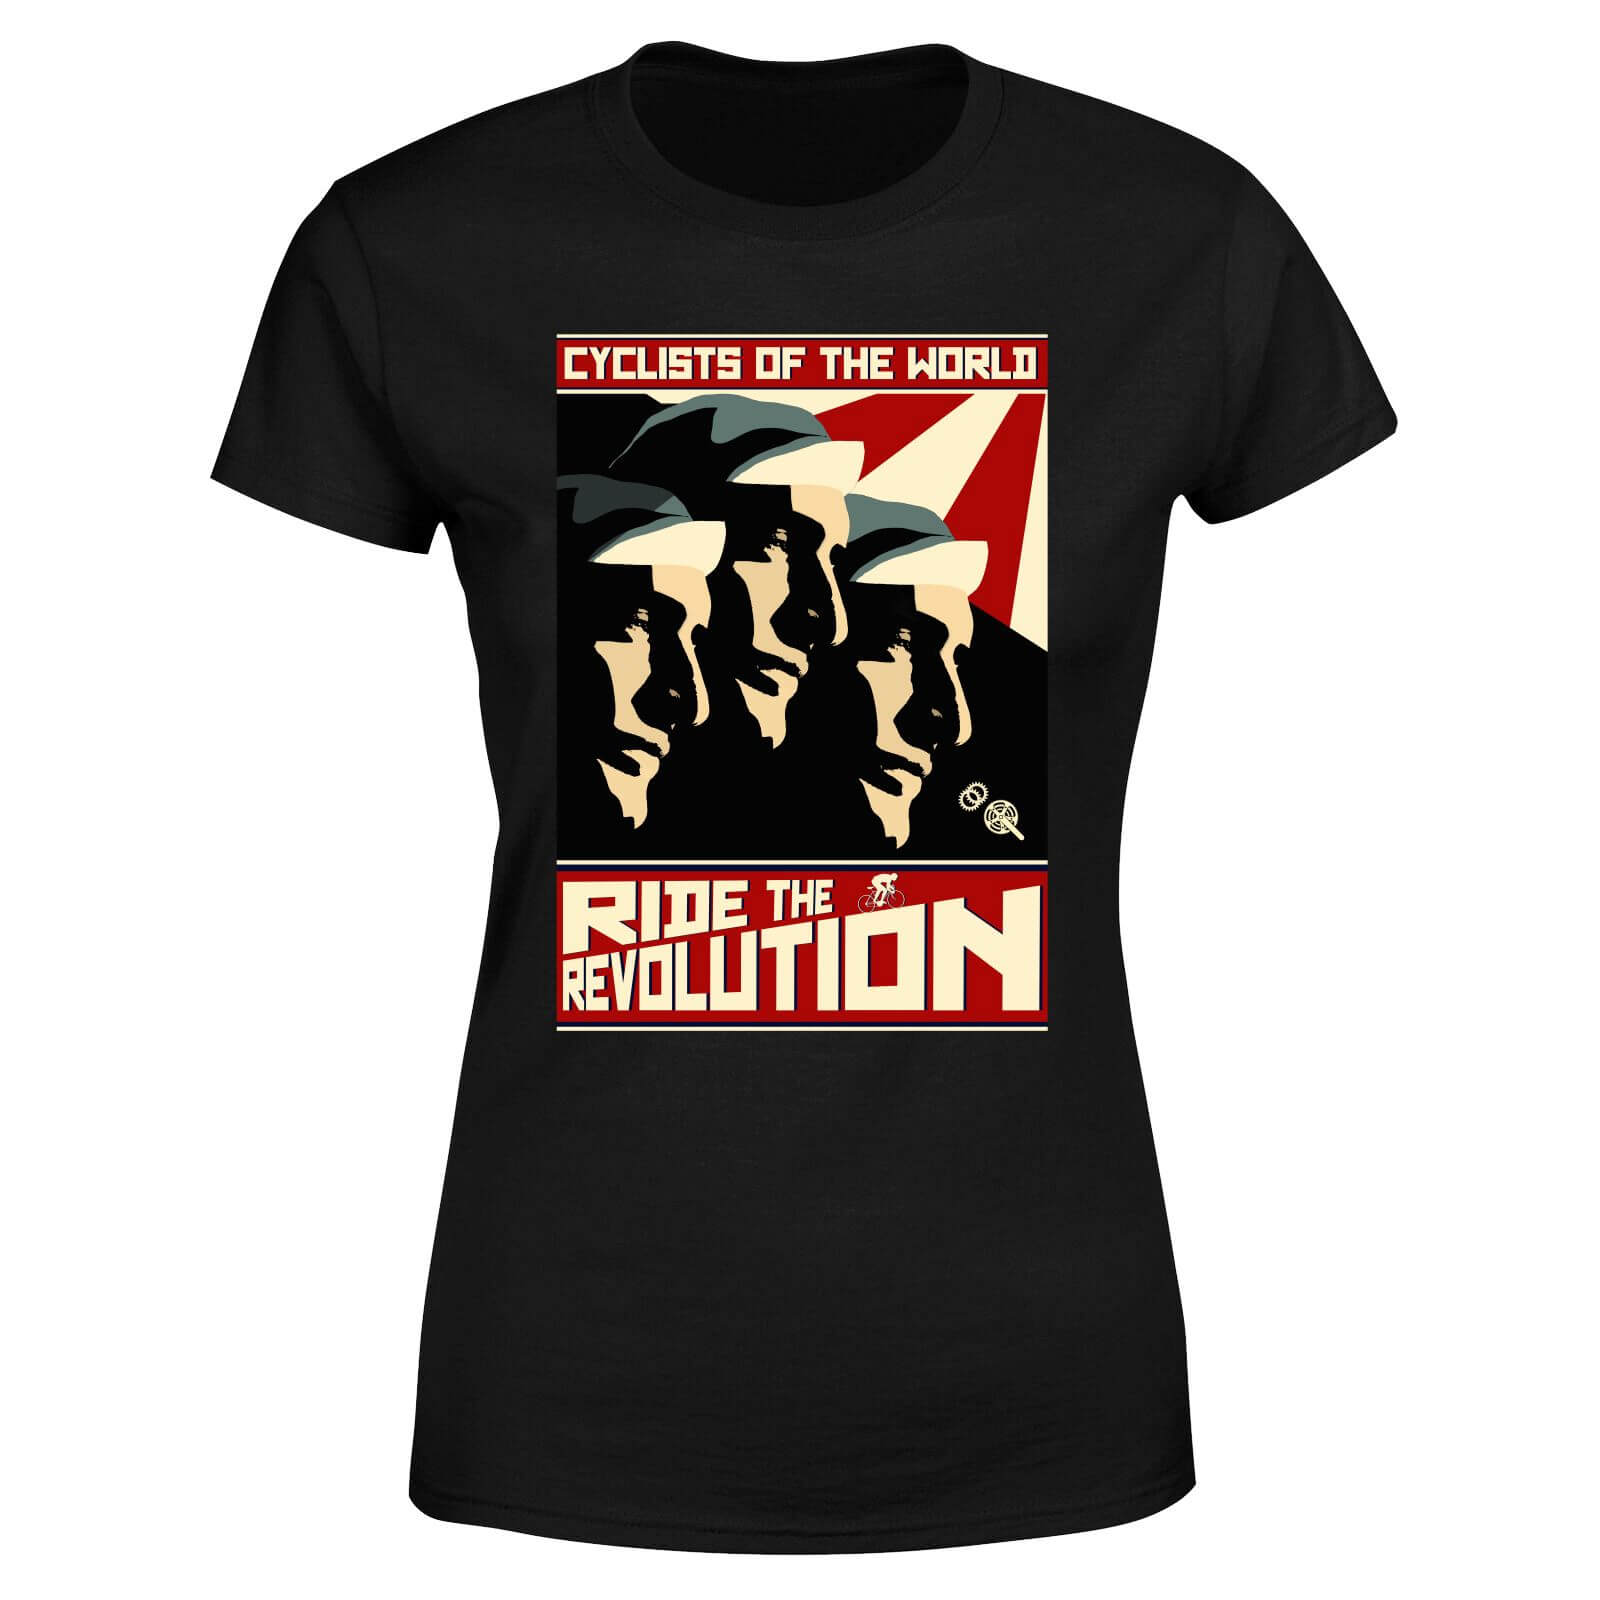 Revolution Women's T-Shirt - Black - XL - Black